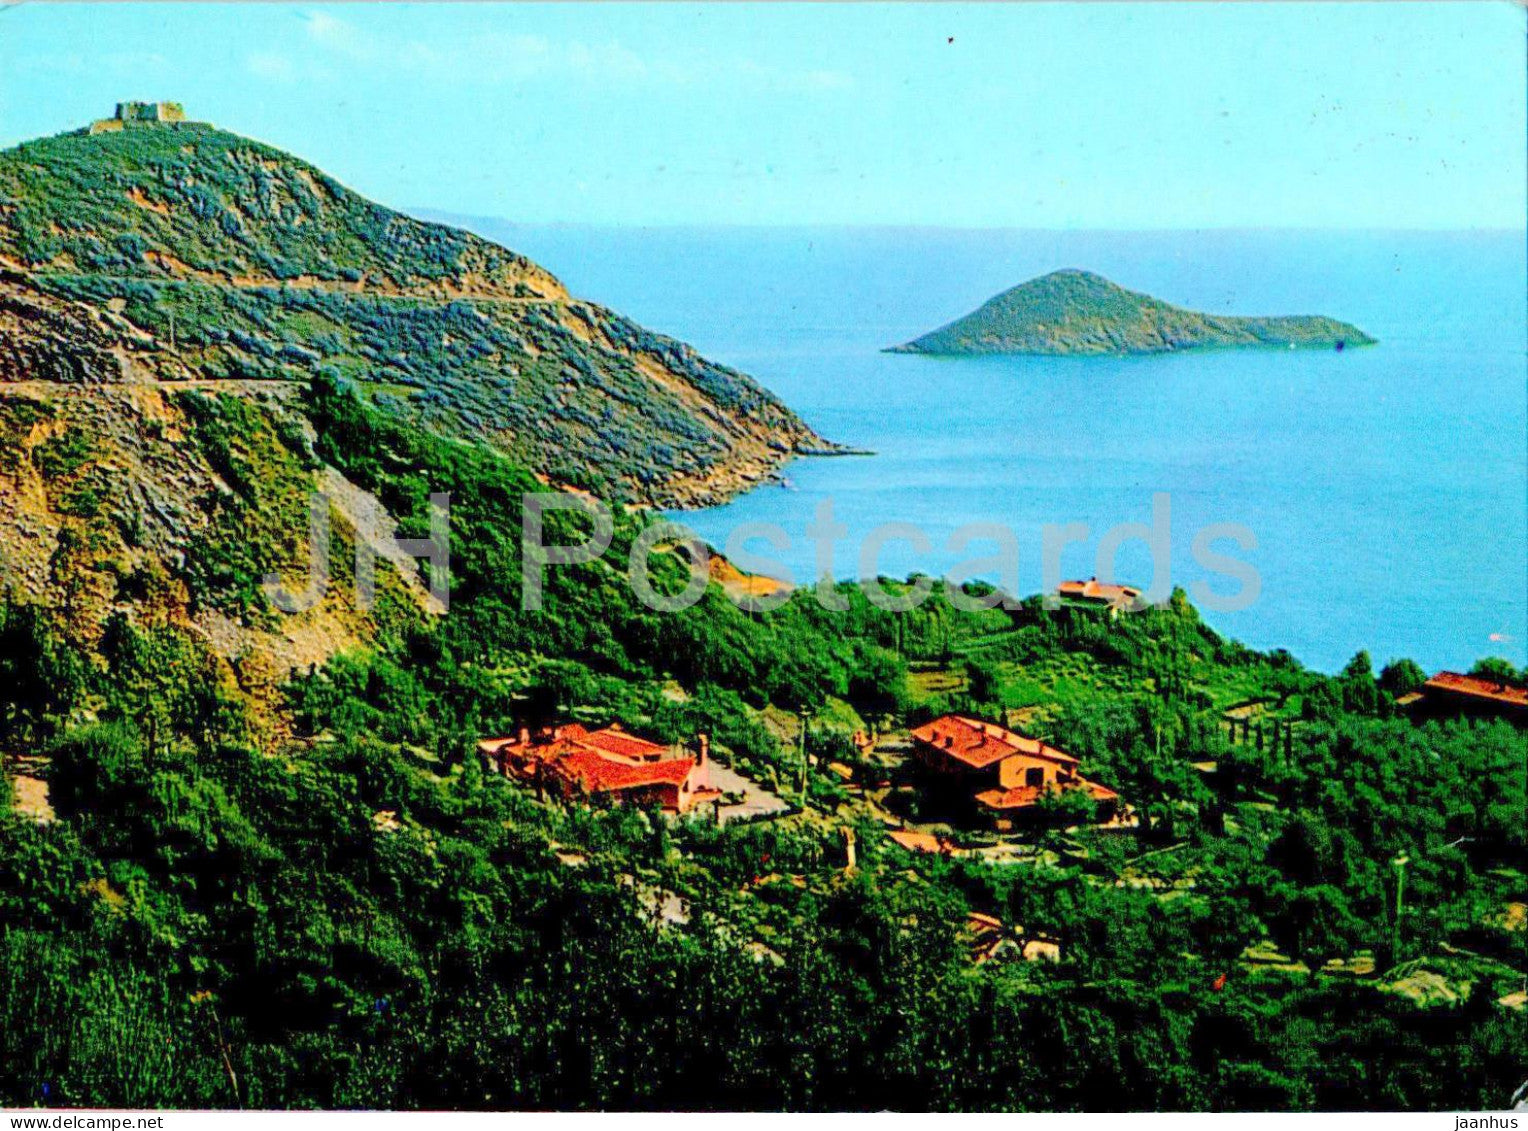 Porto Ercole - Scorcio panoramico - panoramic view - A/114 - 1982 - Italy - used - JH Postcards